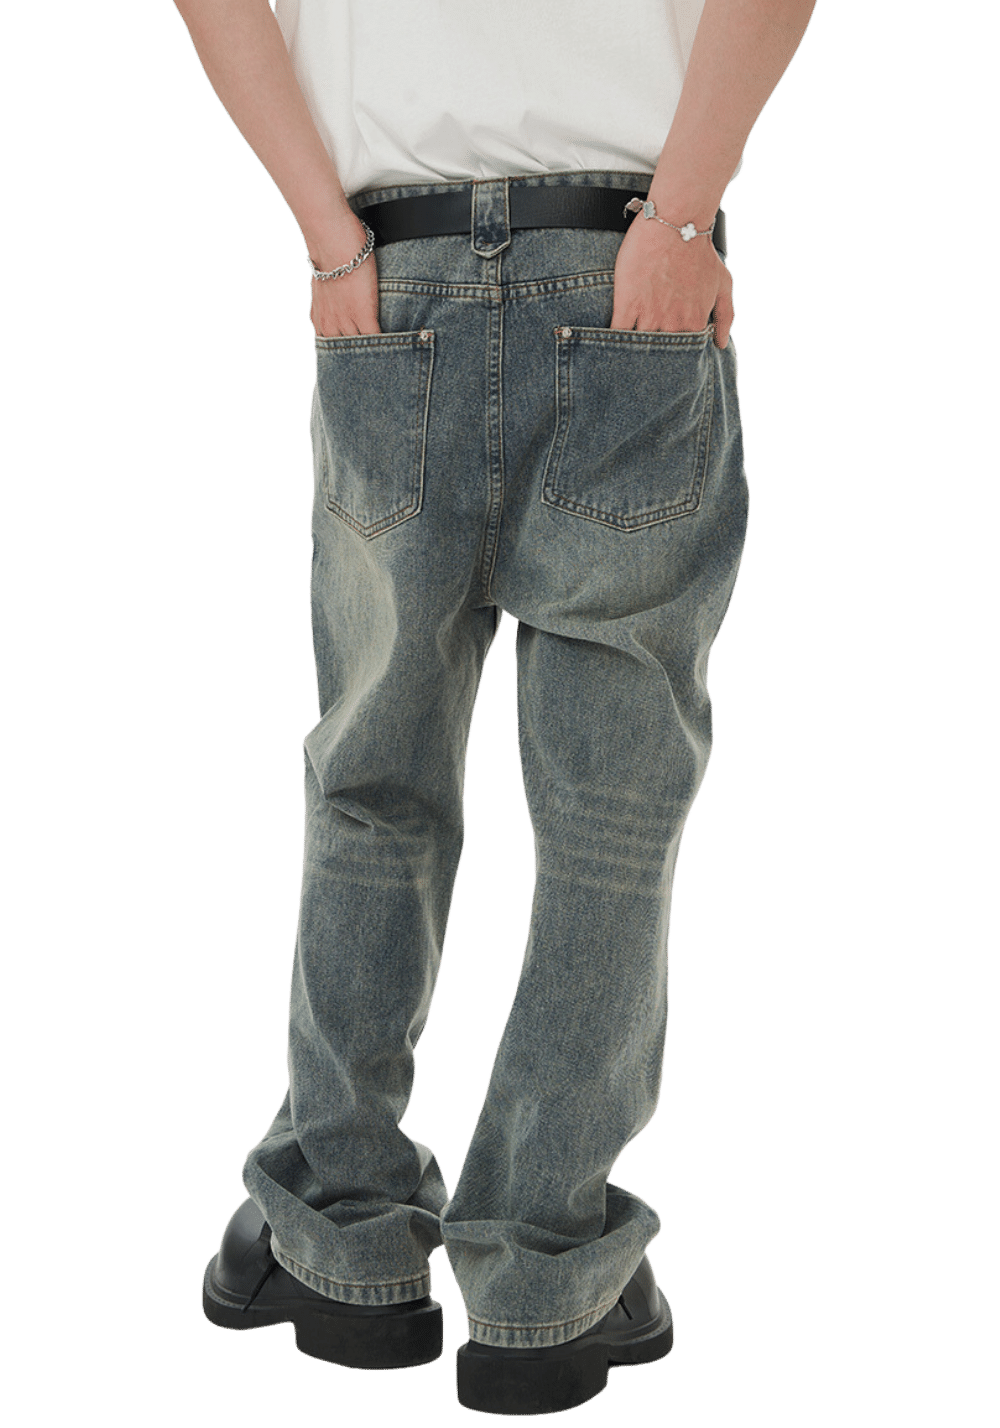 Distressed Cargo Pocket Jeans - PSYLOS 1, Distressed Cargo Pocket Jeans, Pants, HARSH AND CRUEL, PSYLOS 1